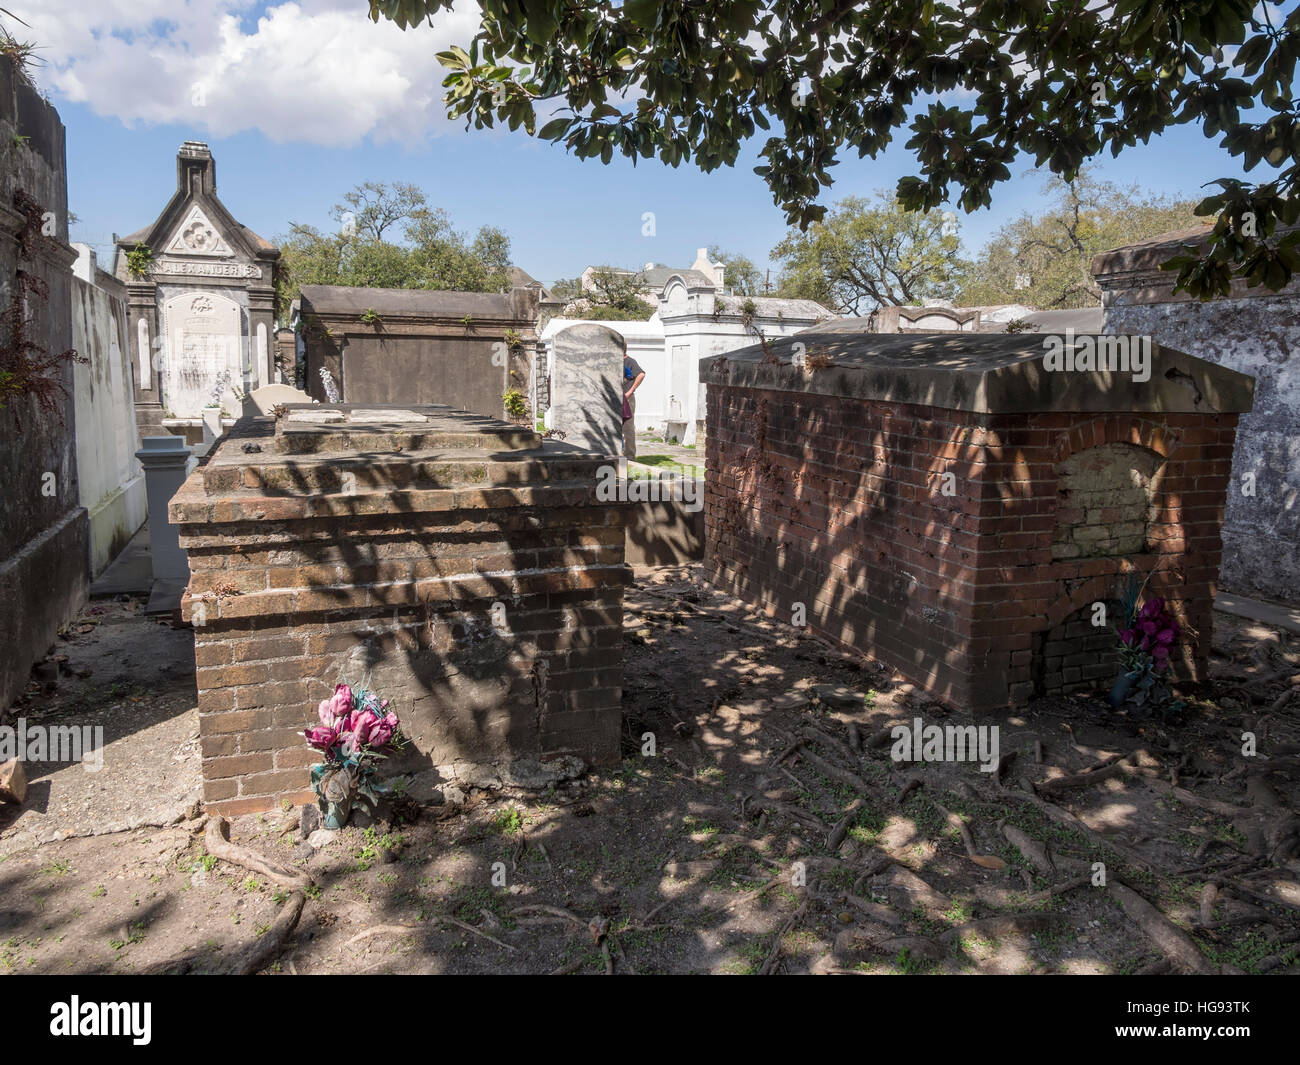 Lafayette Cemetery No. 1, Garden District, New Orleans Stock Photo